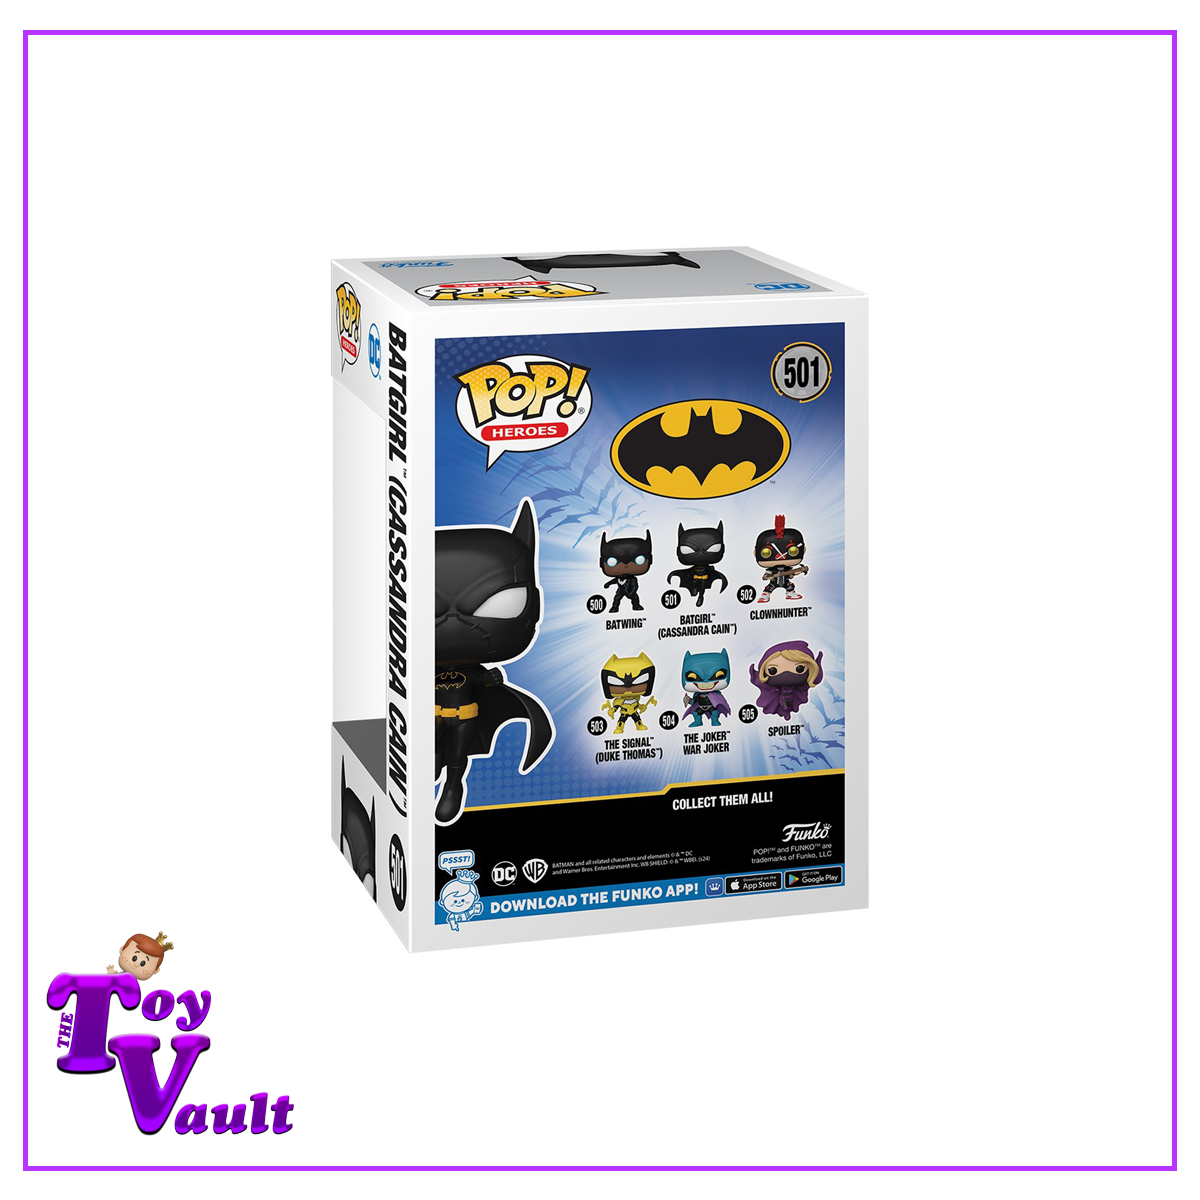 Funko Pop! DC Heroes Batman War Zone - Batgirl (Cassandra Cain) #501